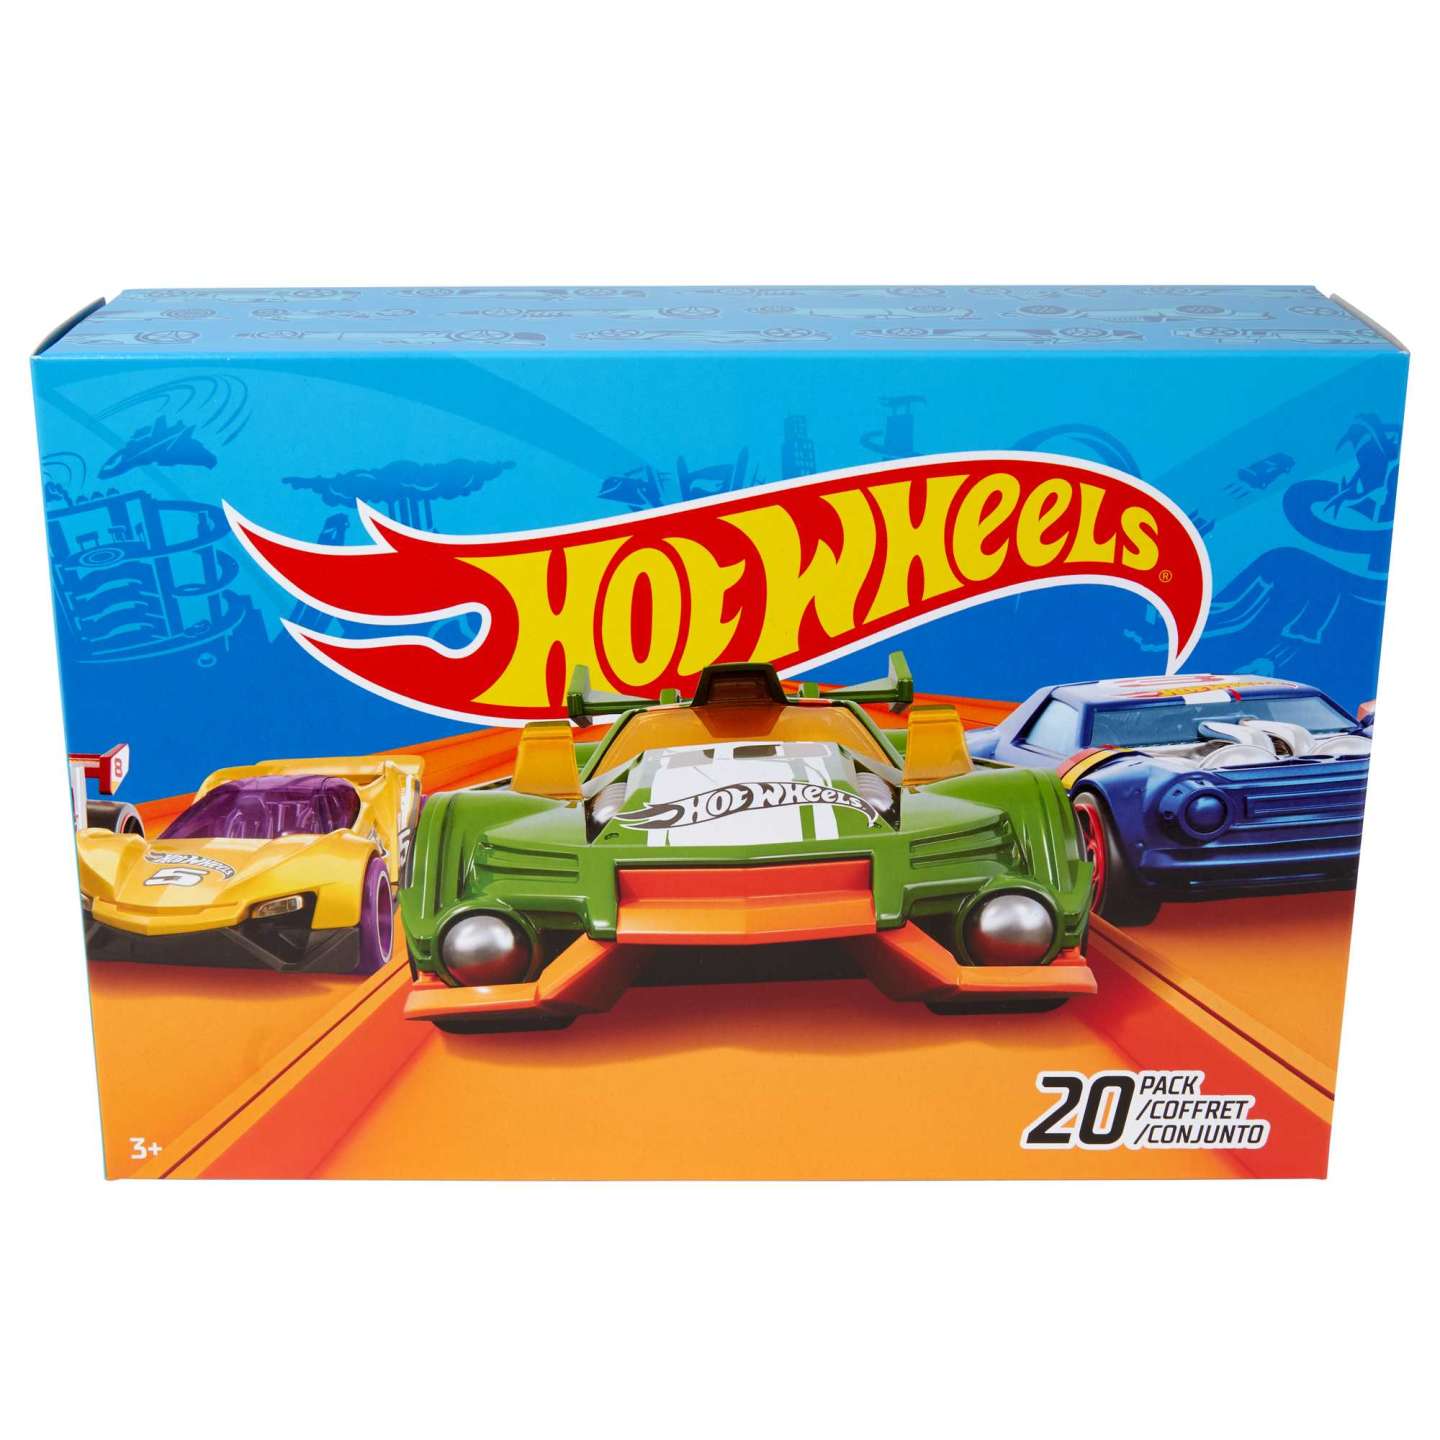 Mattel DXY59 – HotWheels – Geschenkset, Die-Cast-Fahrzeuge, 1:64, 20er Pack